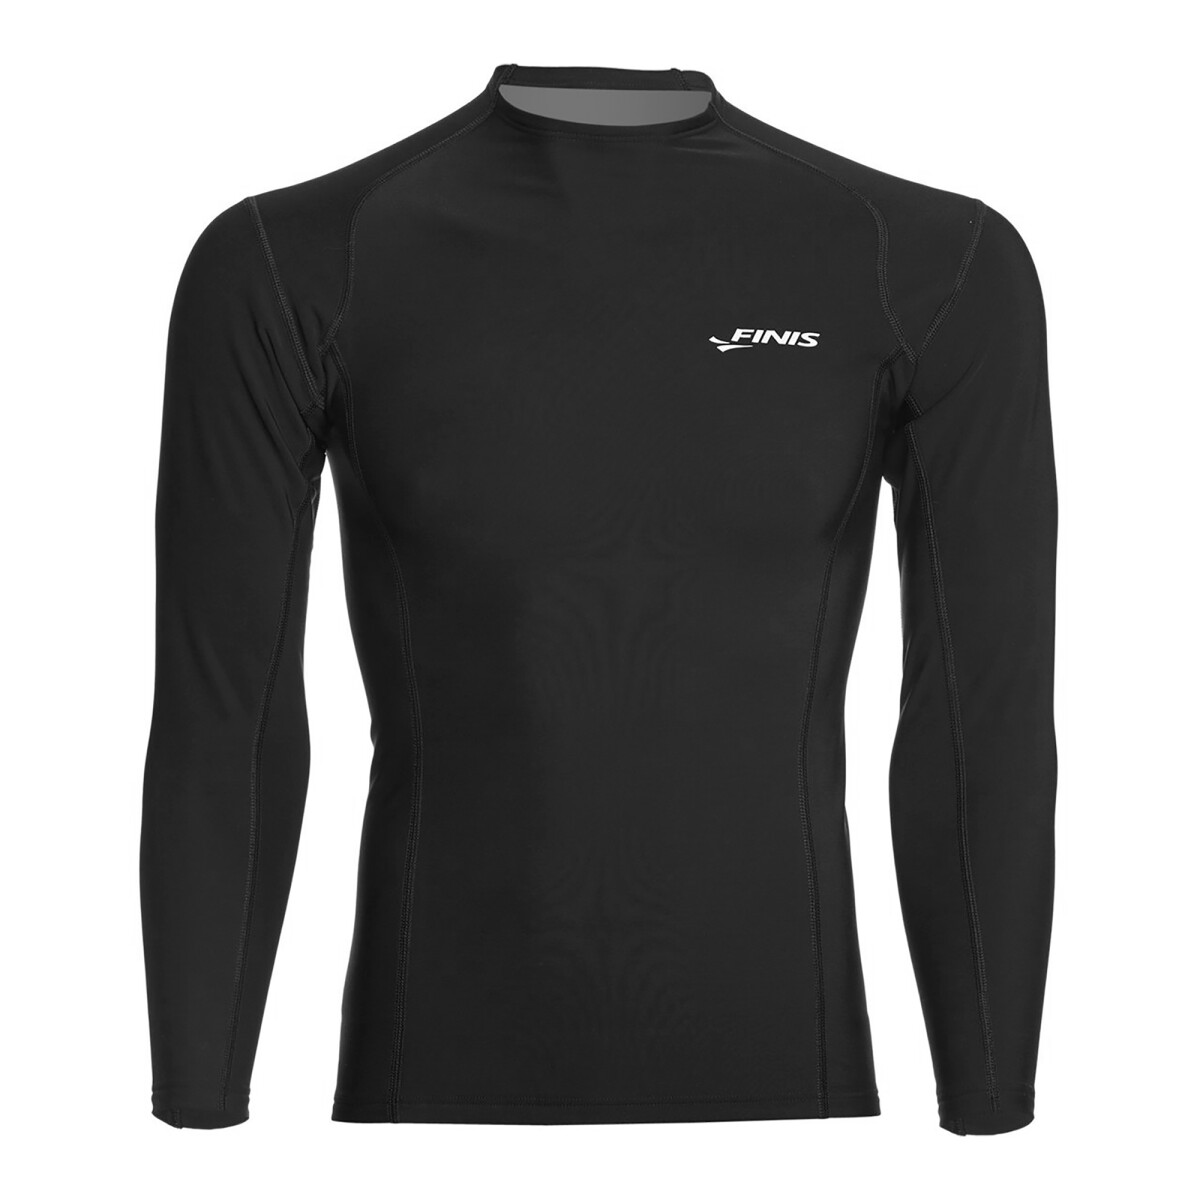 Finis - Camiseta Térmica Unisex Thermal Training Shirt 1.05.048.05 - Protección Uva, Uvb, Antibacter - 001 